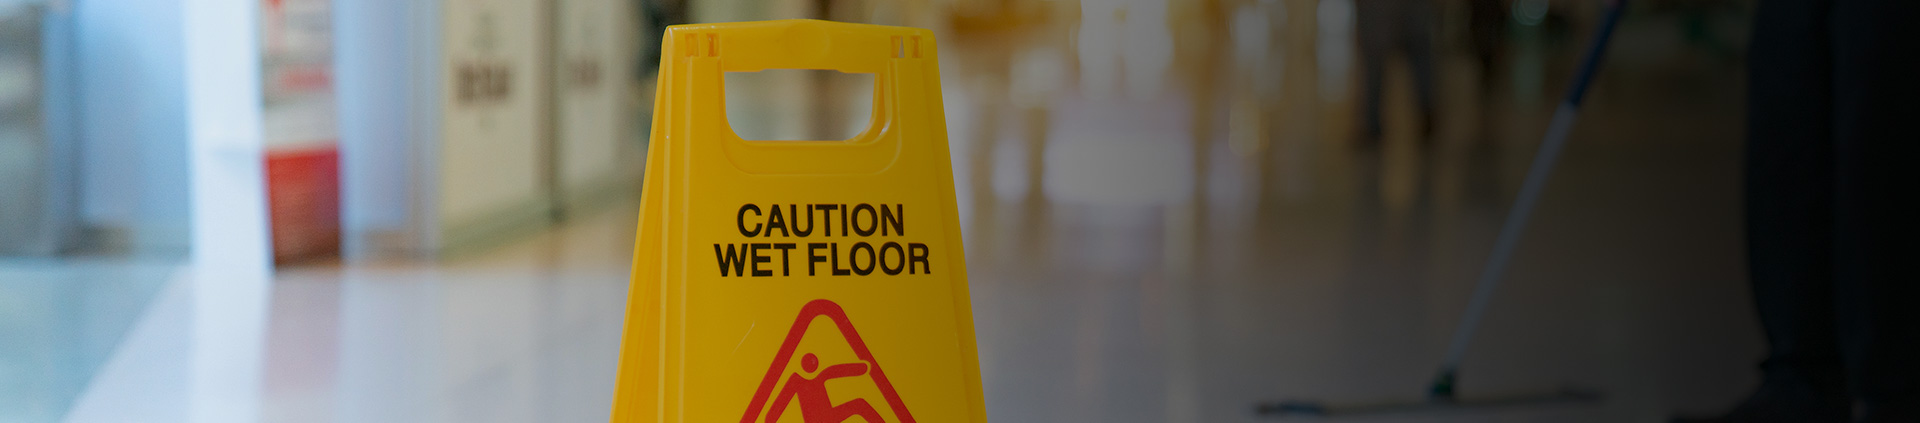 precaución señalización de piso mojado